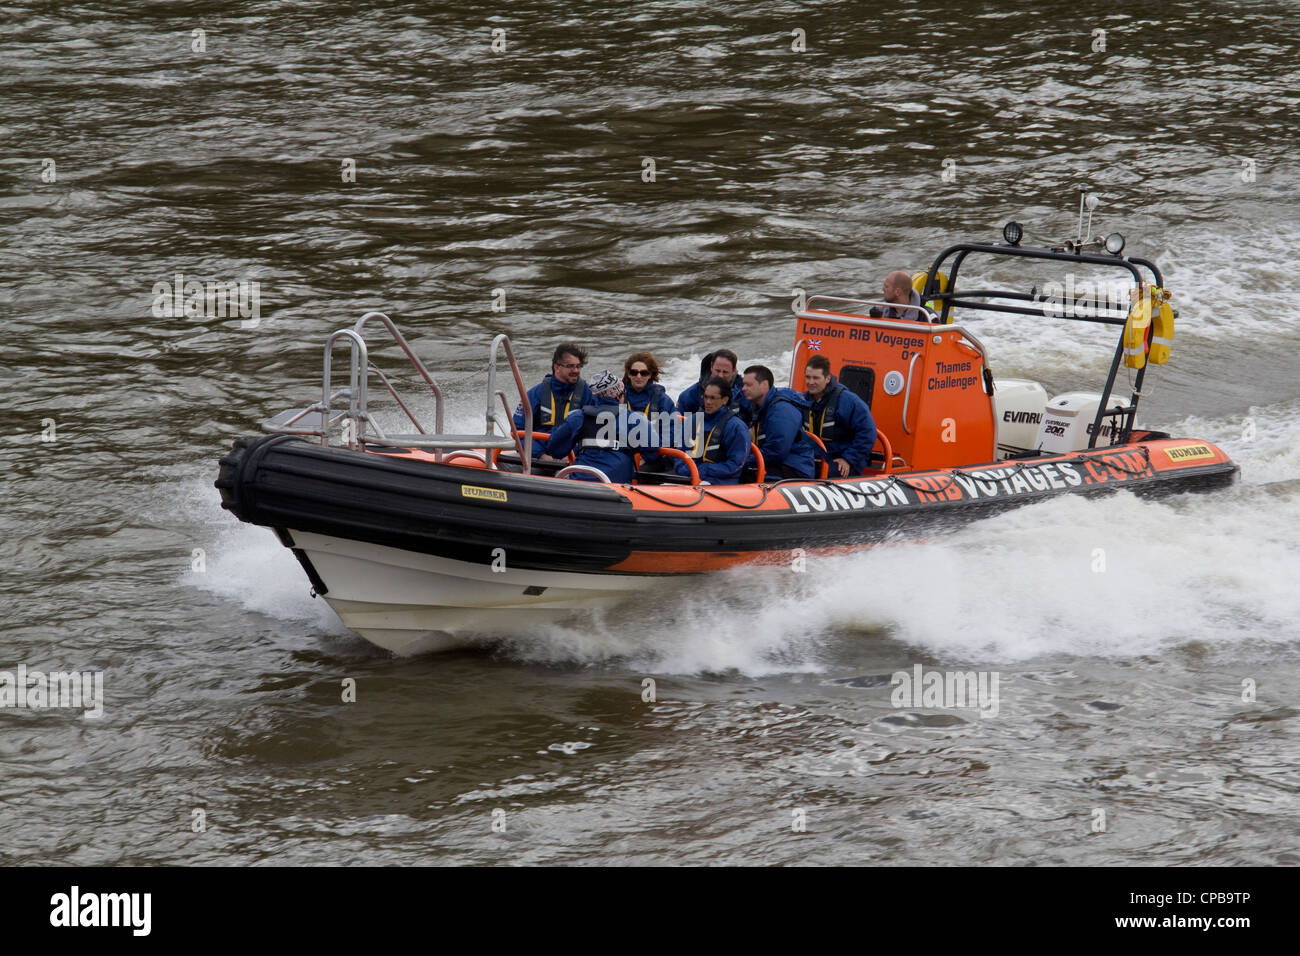 London rib voyage speedboat pleasure trip on Thames Stock Photo